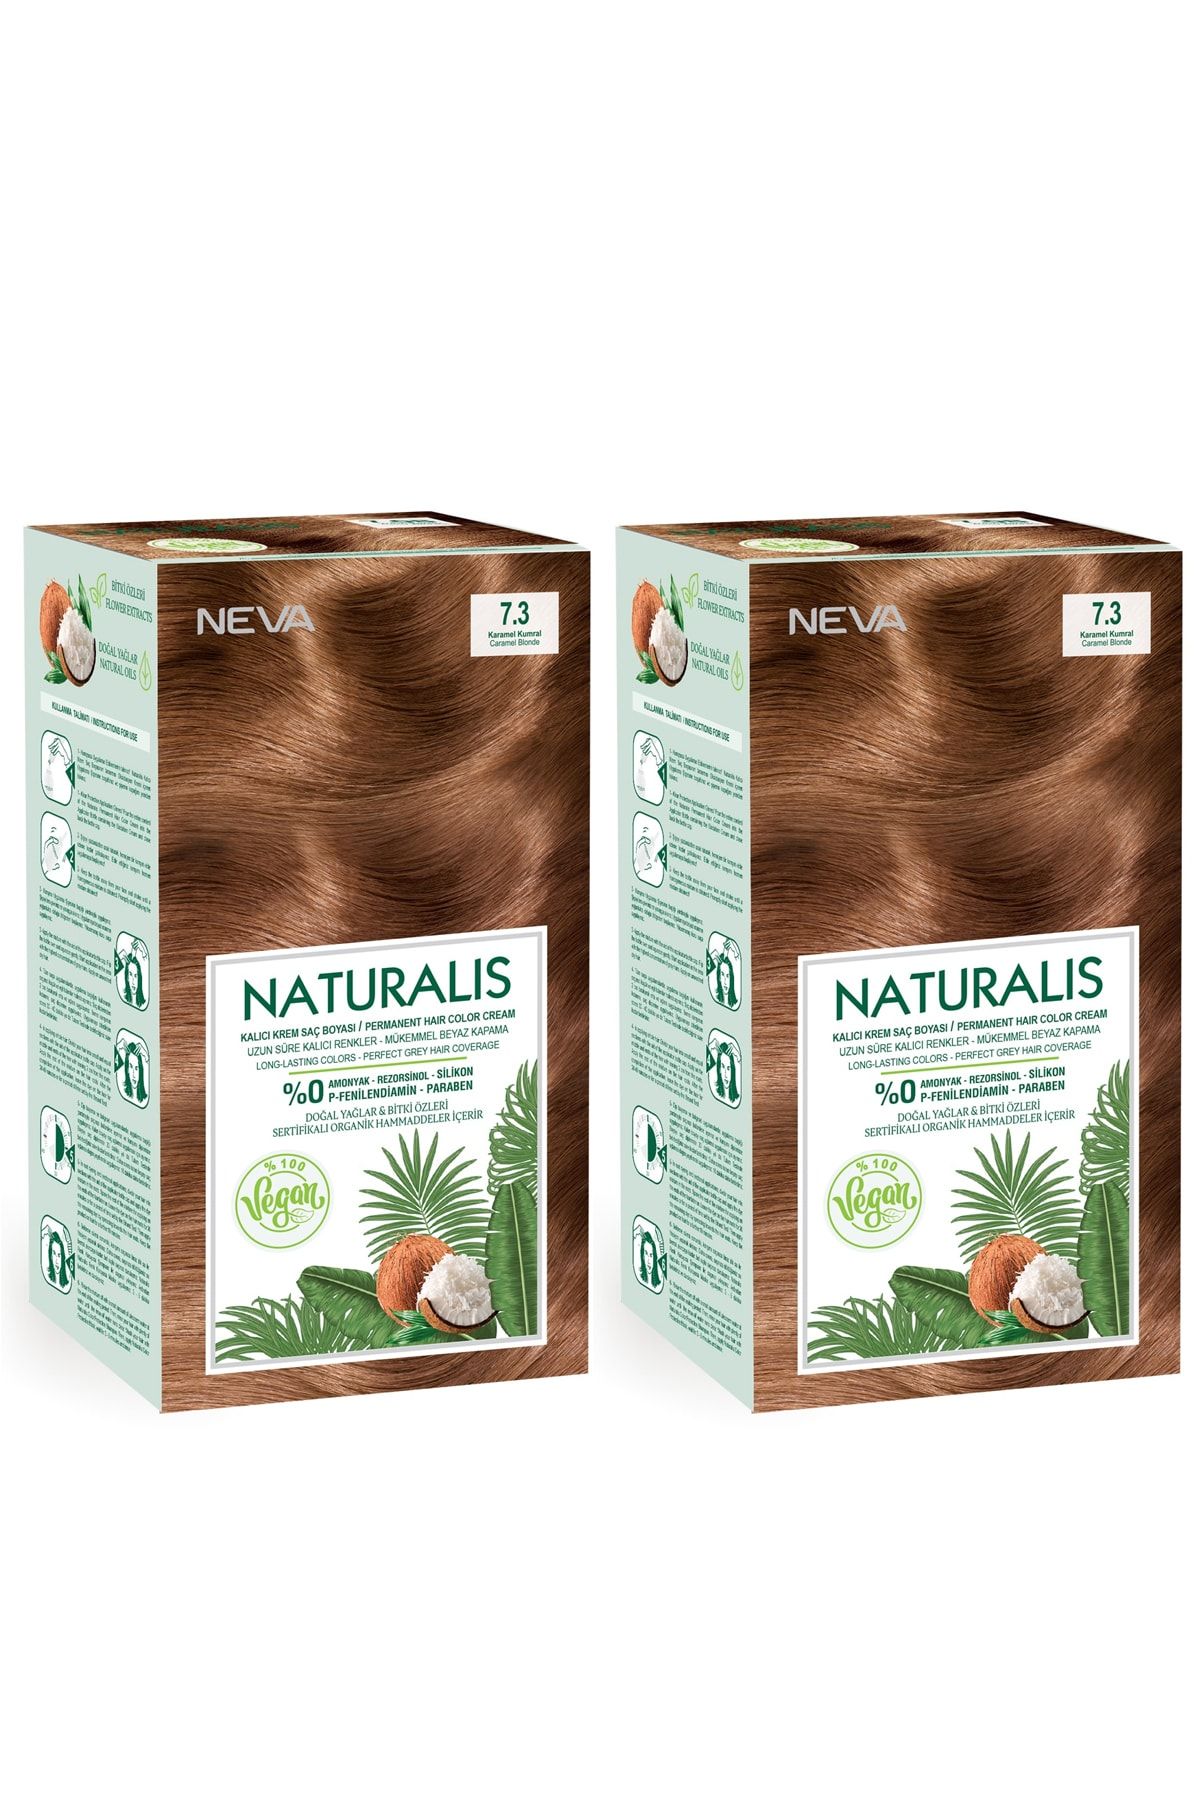 NEVA KOZMETİK Naturalis Saç Boyası 7.3 Karamel Kumral %100 Vegan 2'li Set